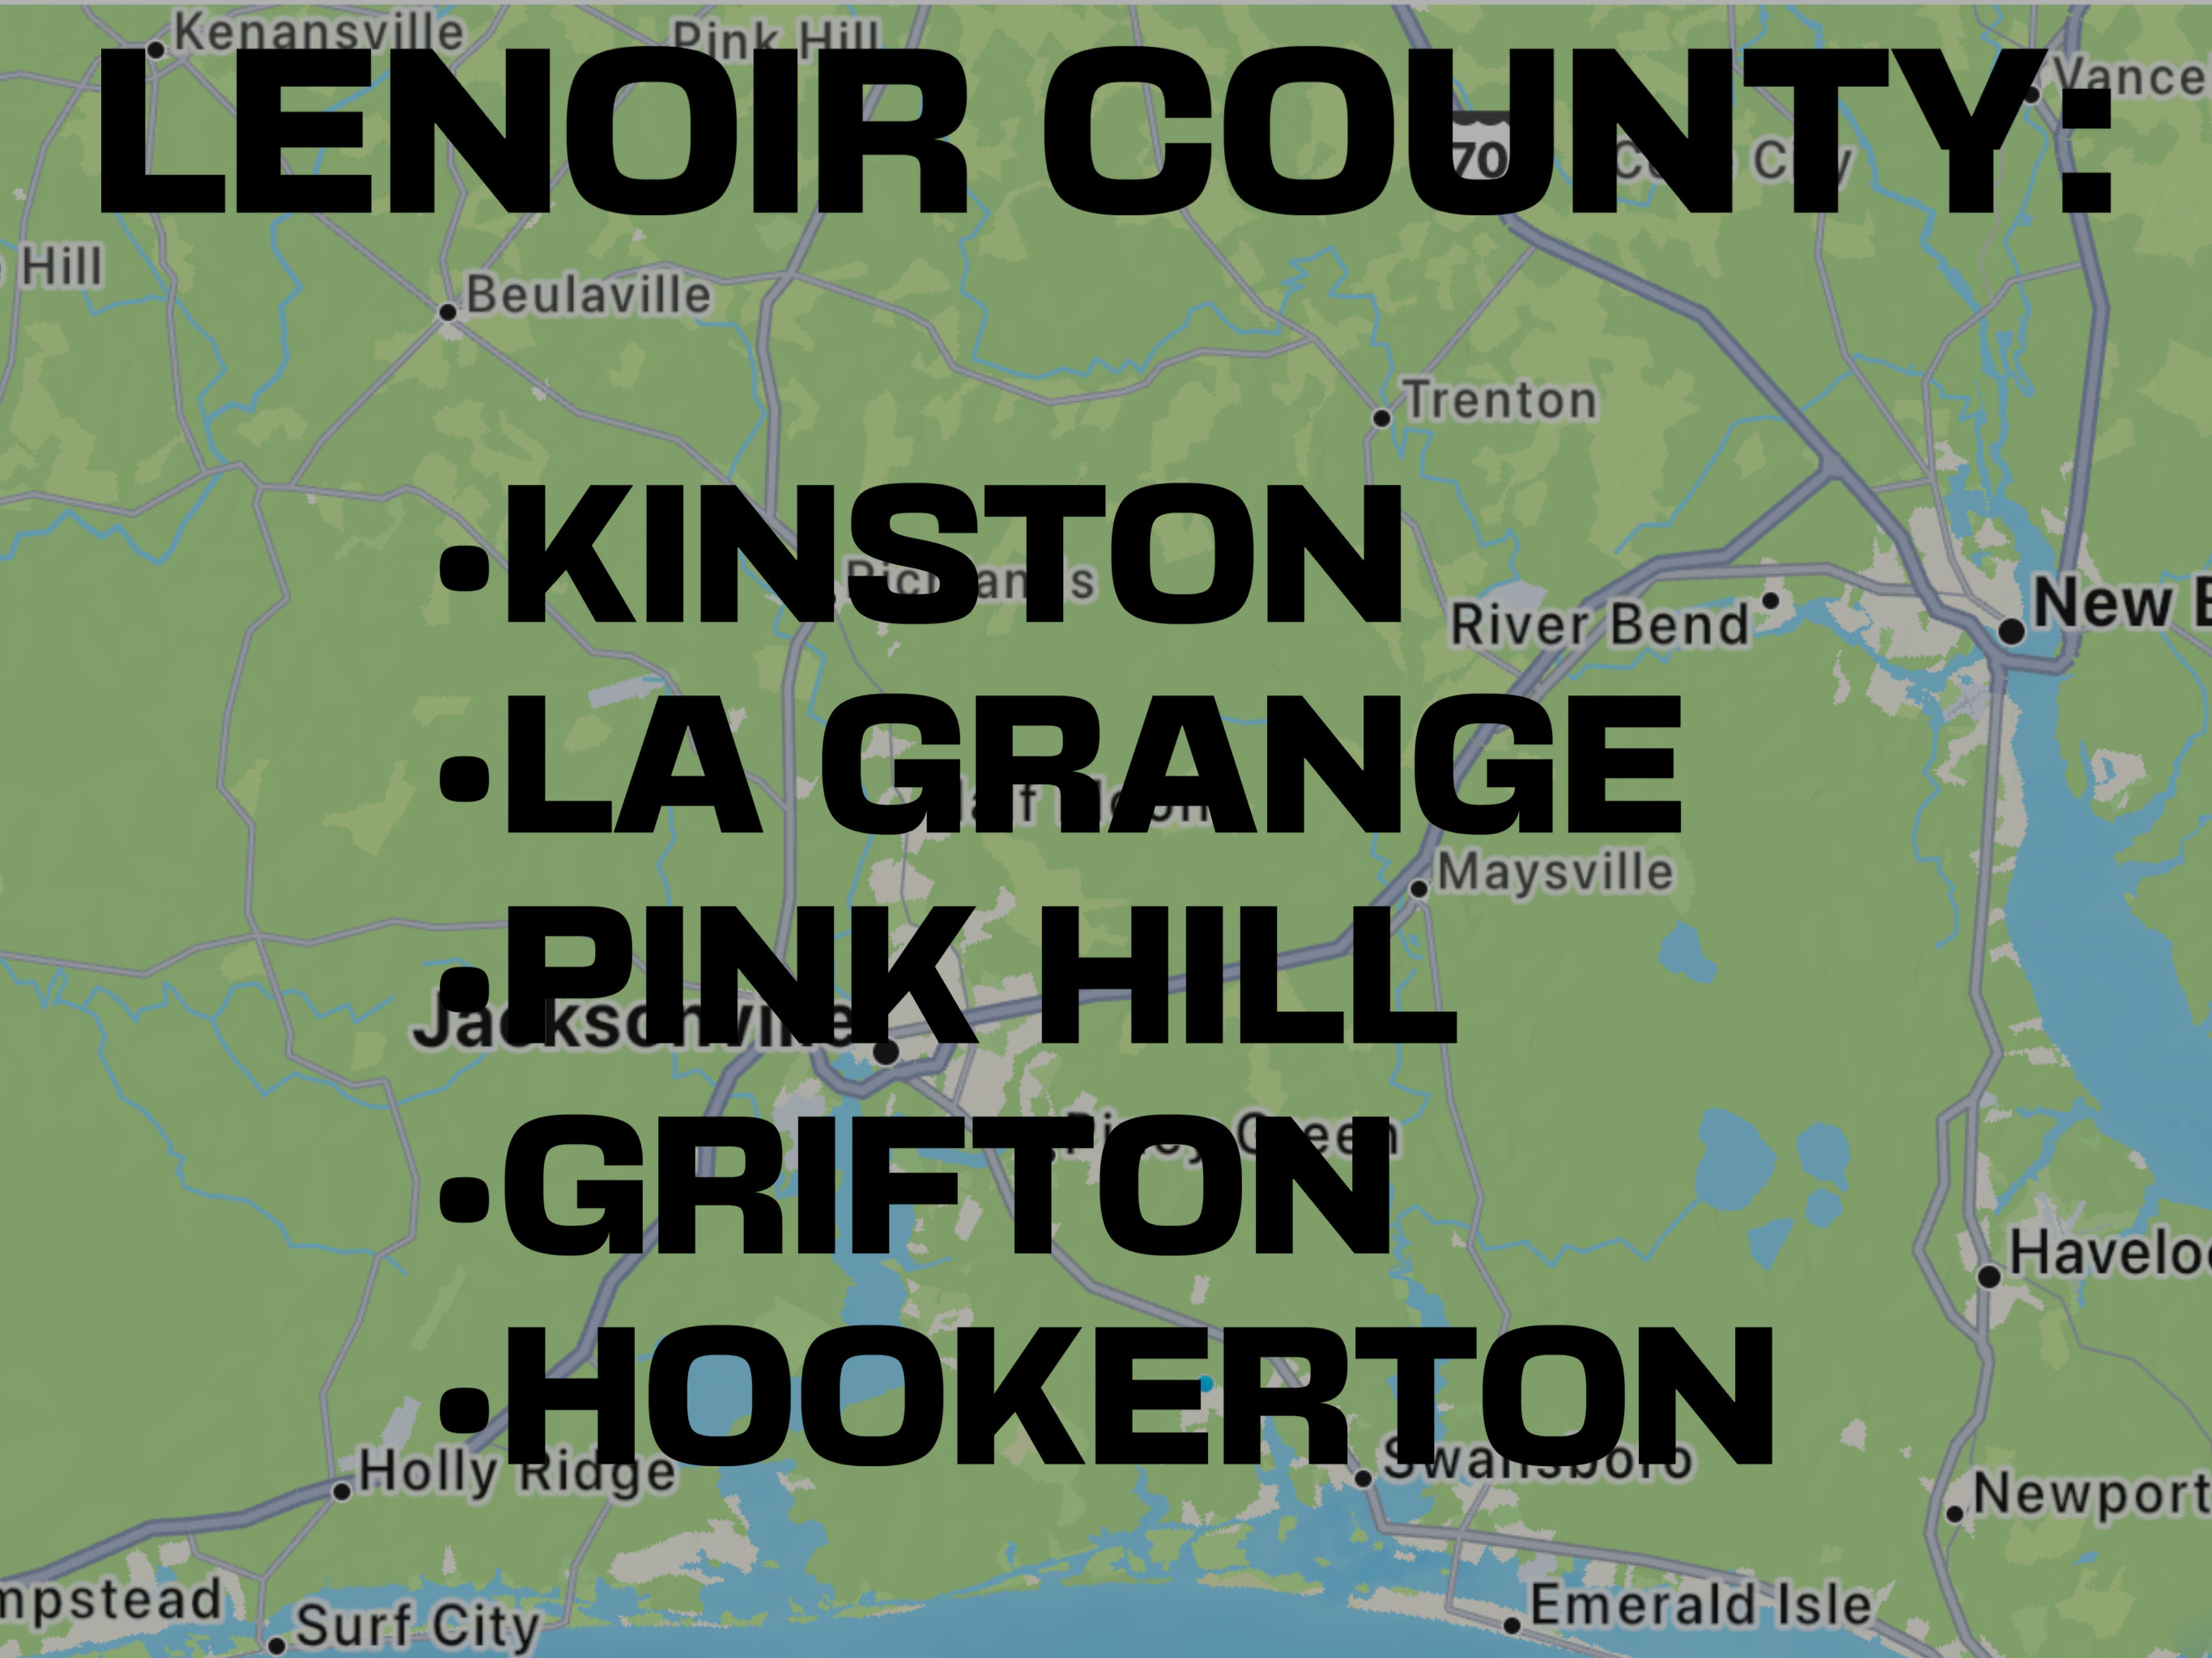 Carolina EartHWerx serves Lenoir county North Carolina which consists of kinston, la grange, pink hill, Grifton, and hookerton.